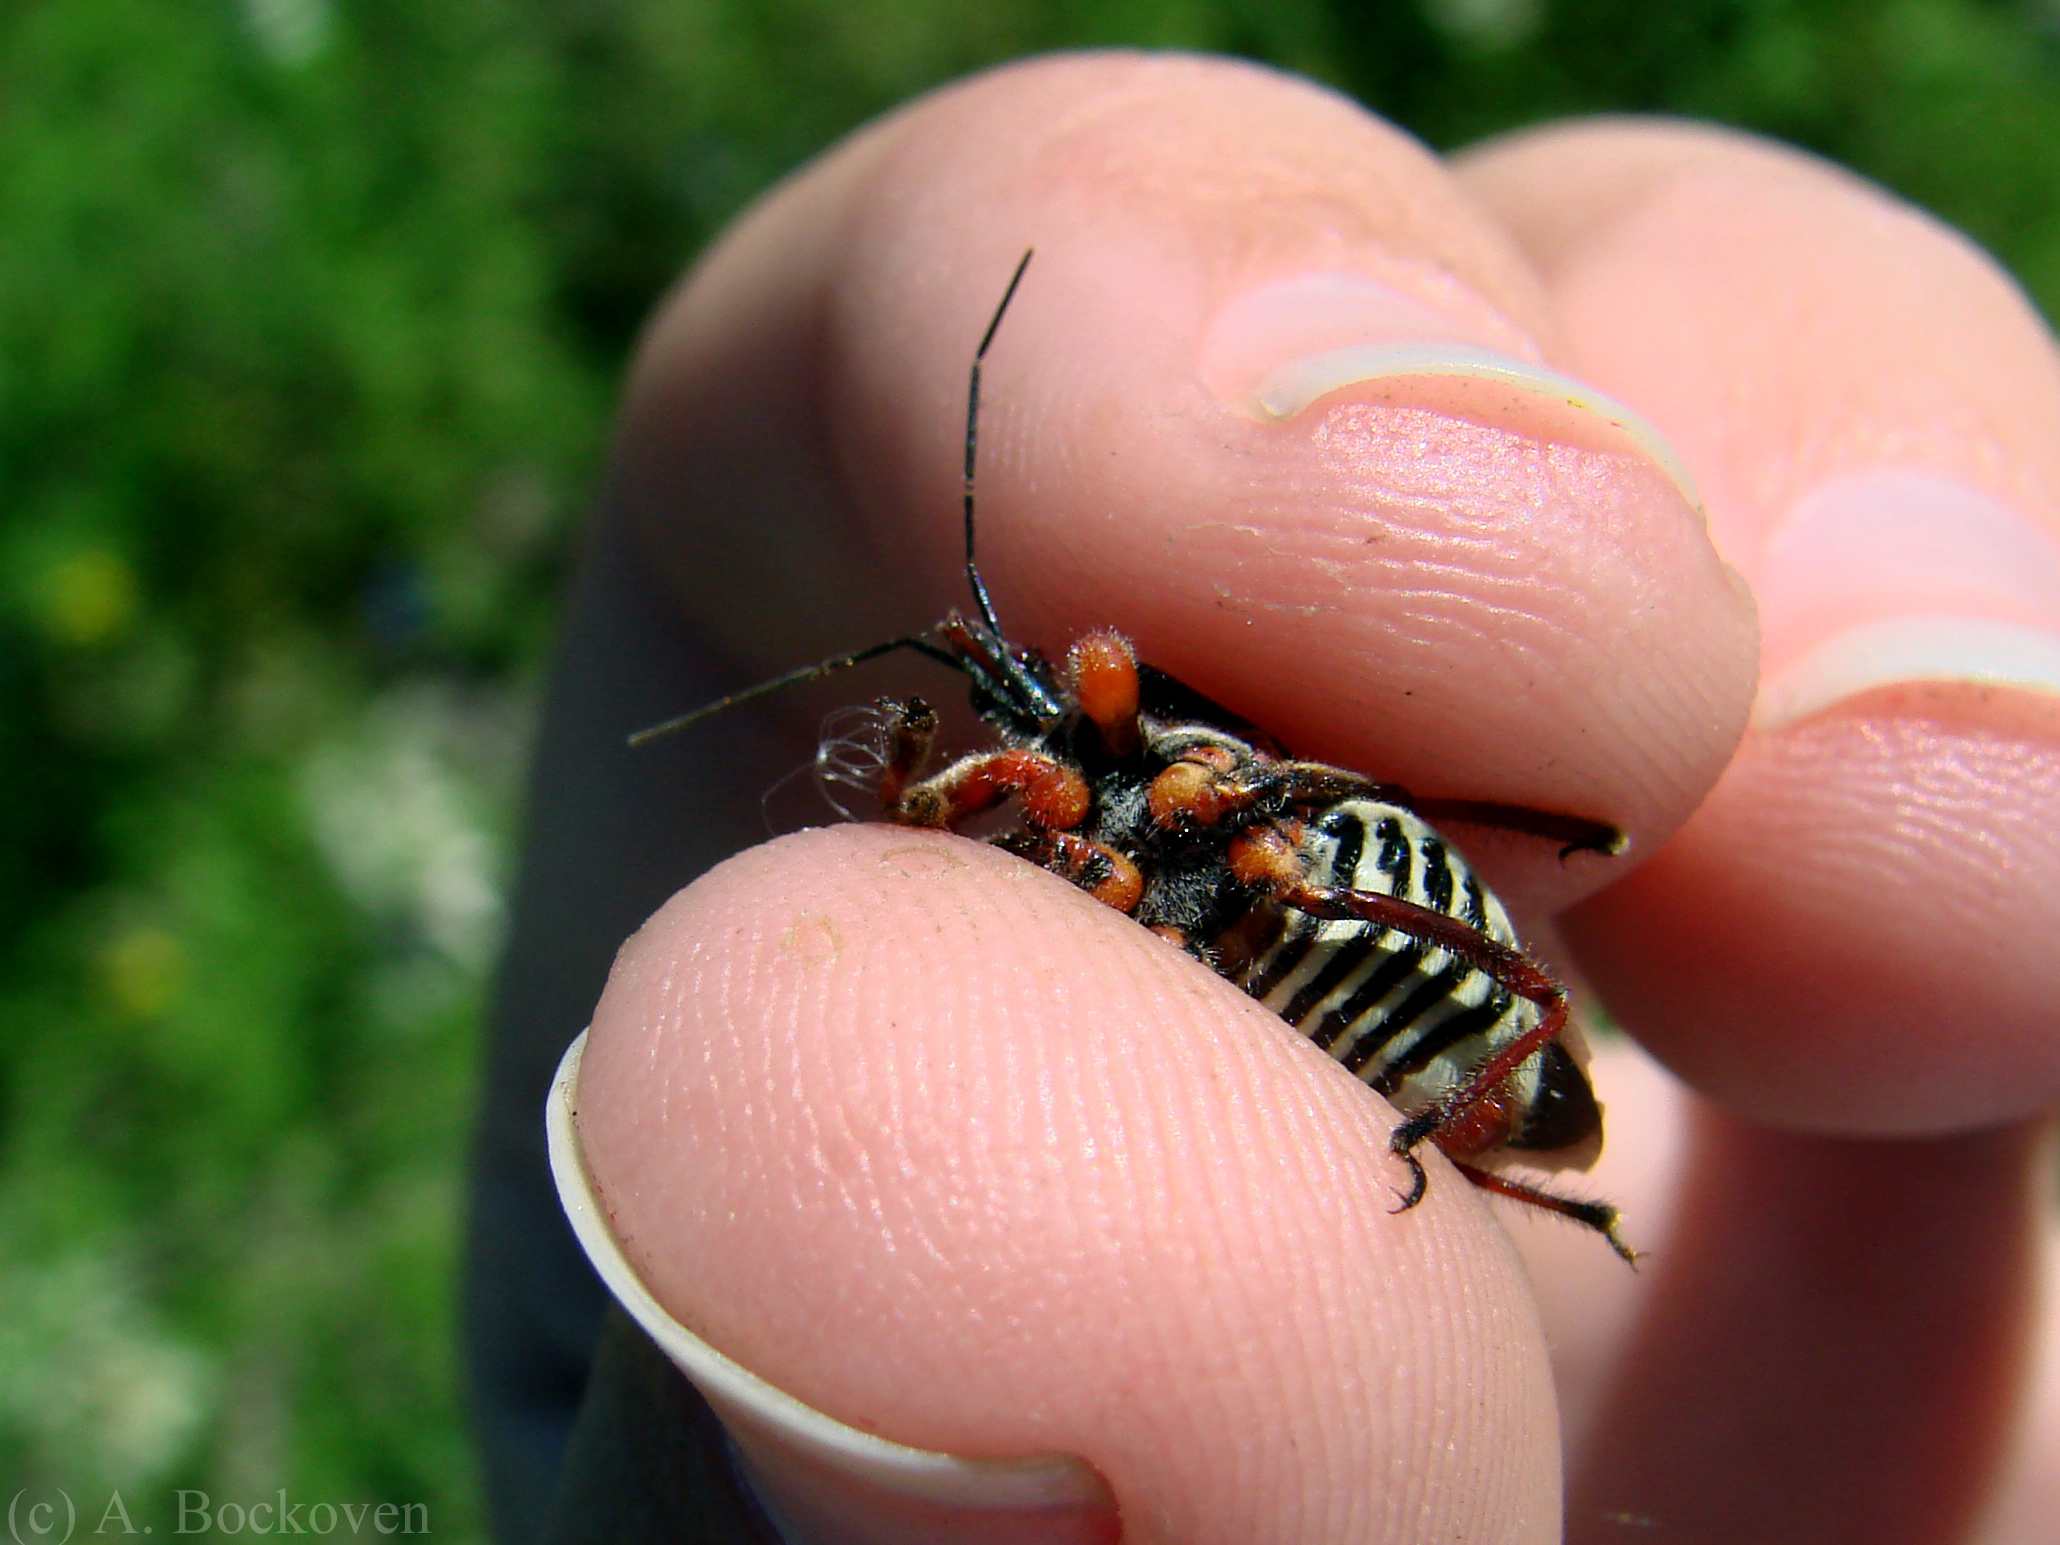 Triatomine bugs aka kissing bugs or assassin bugs invading Oklahoma